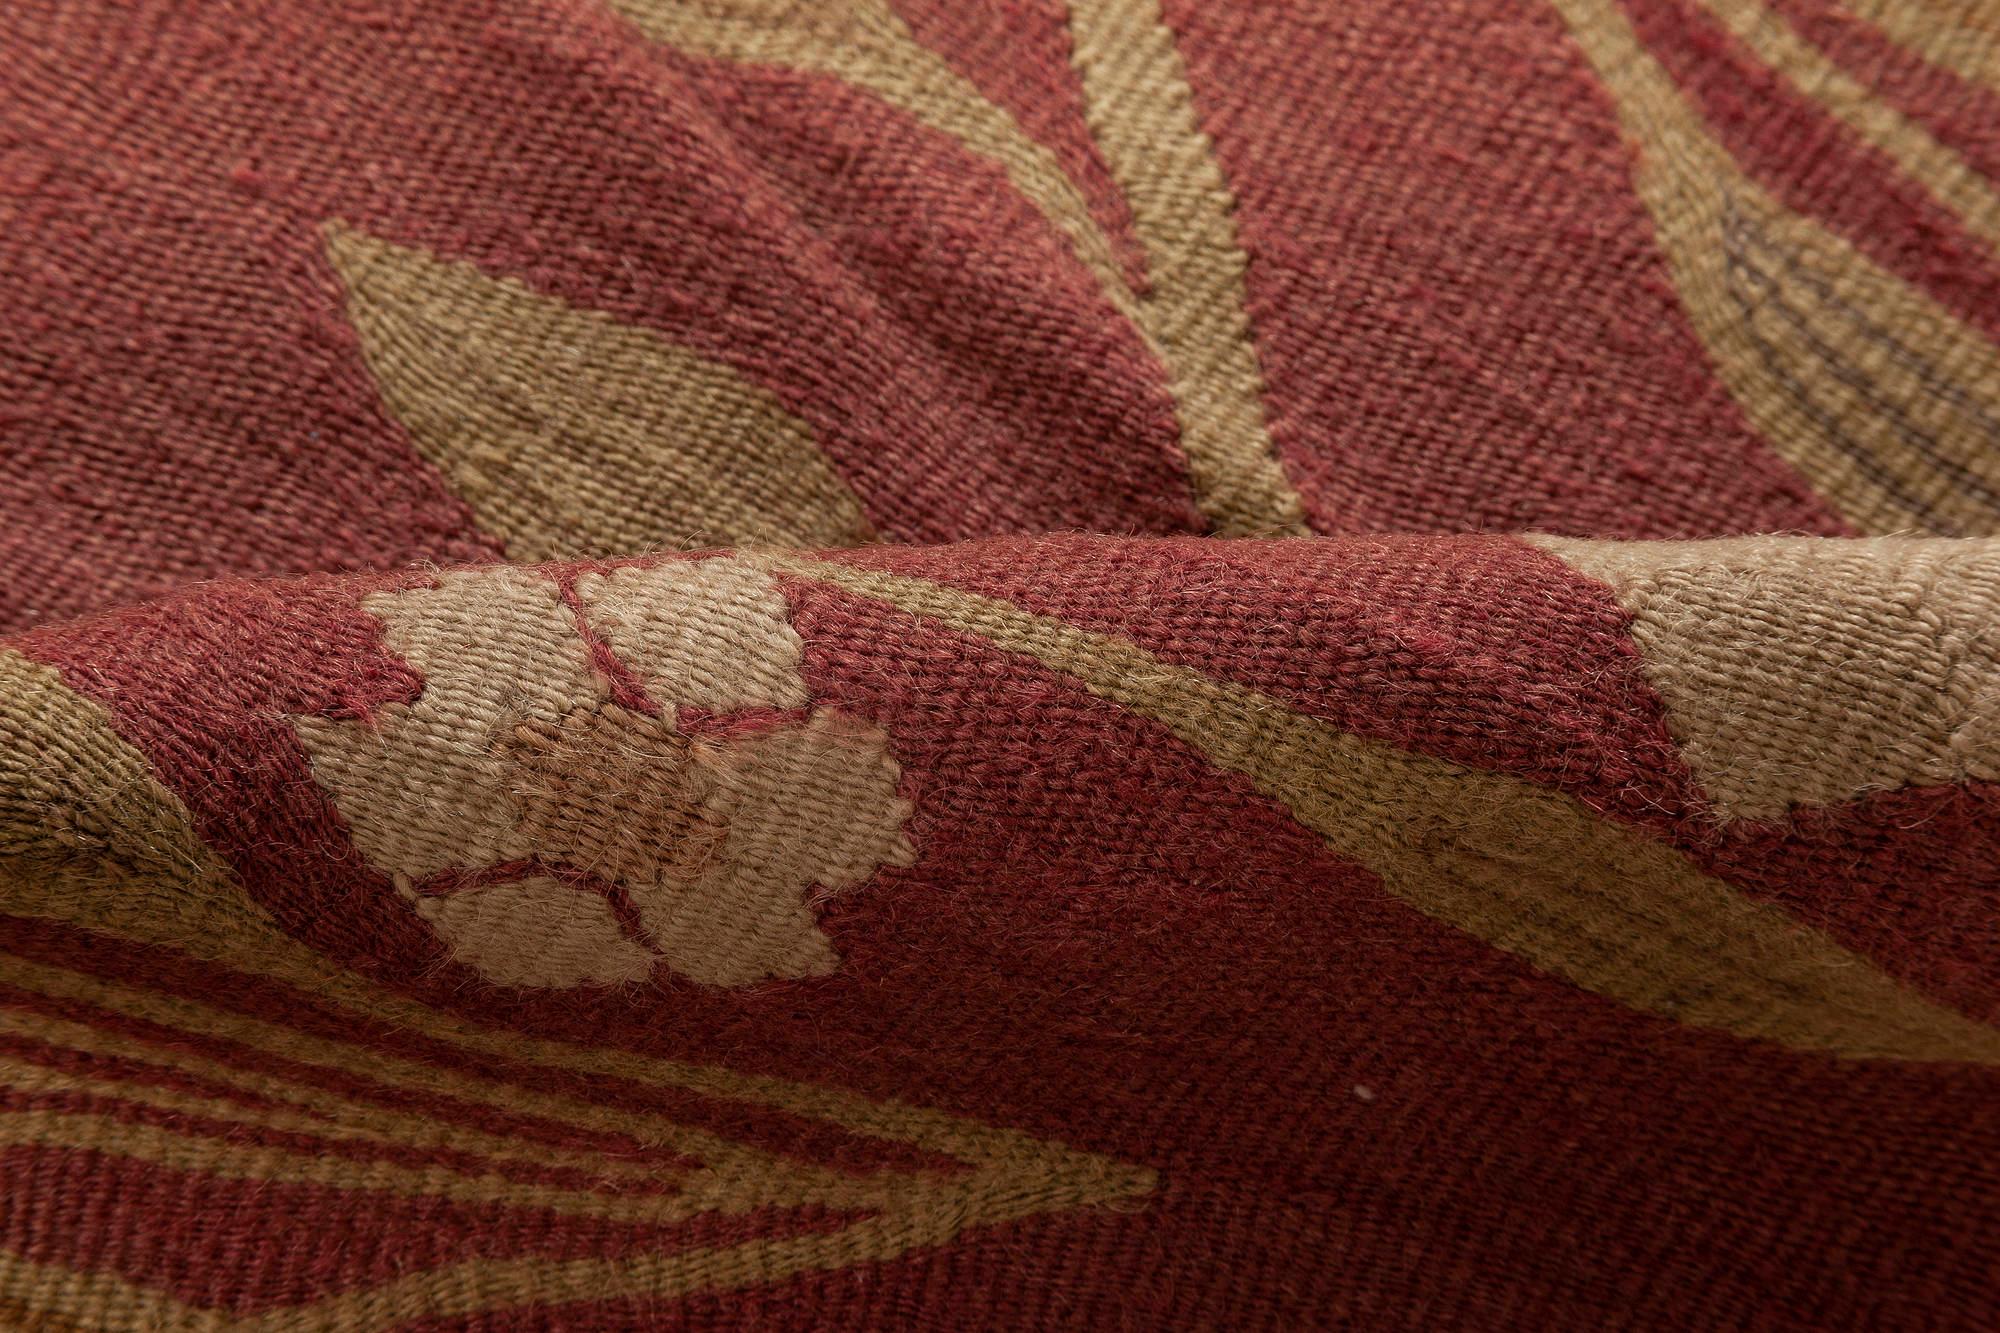 1900s Bessarabian burgundy, brown and beige handmade wool rug.
Size: 9'9